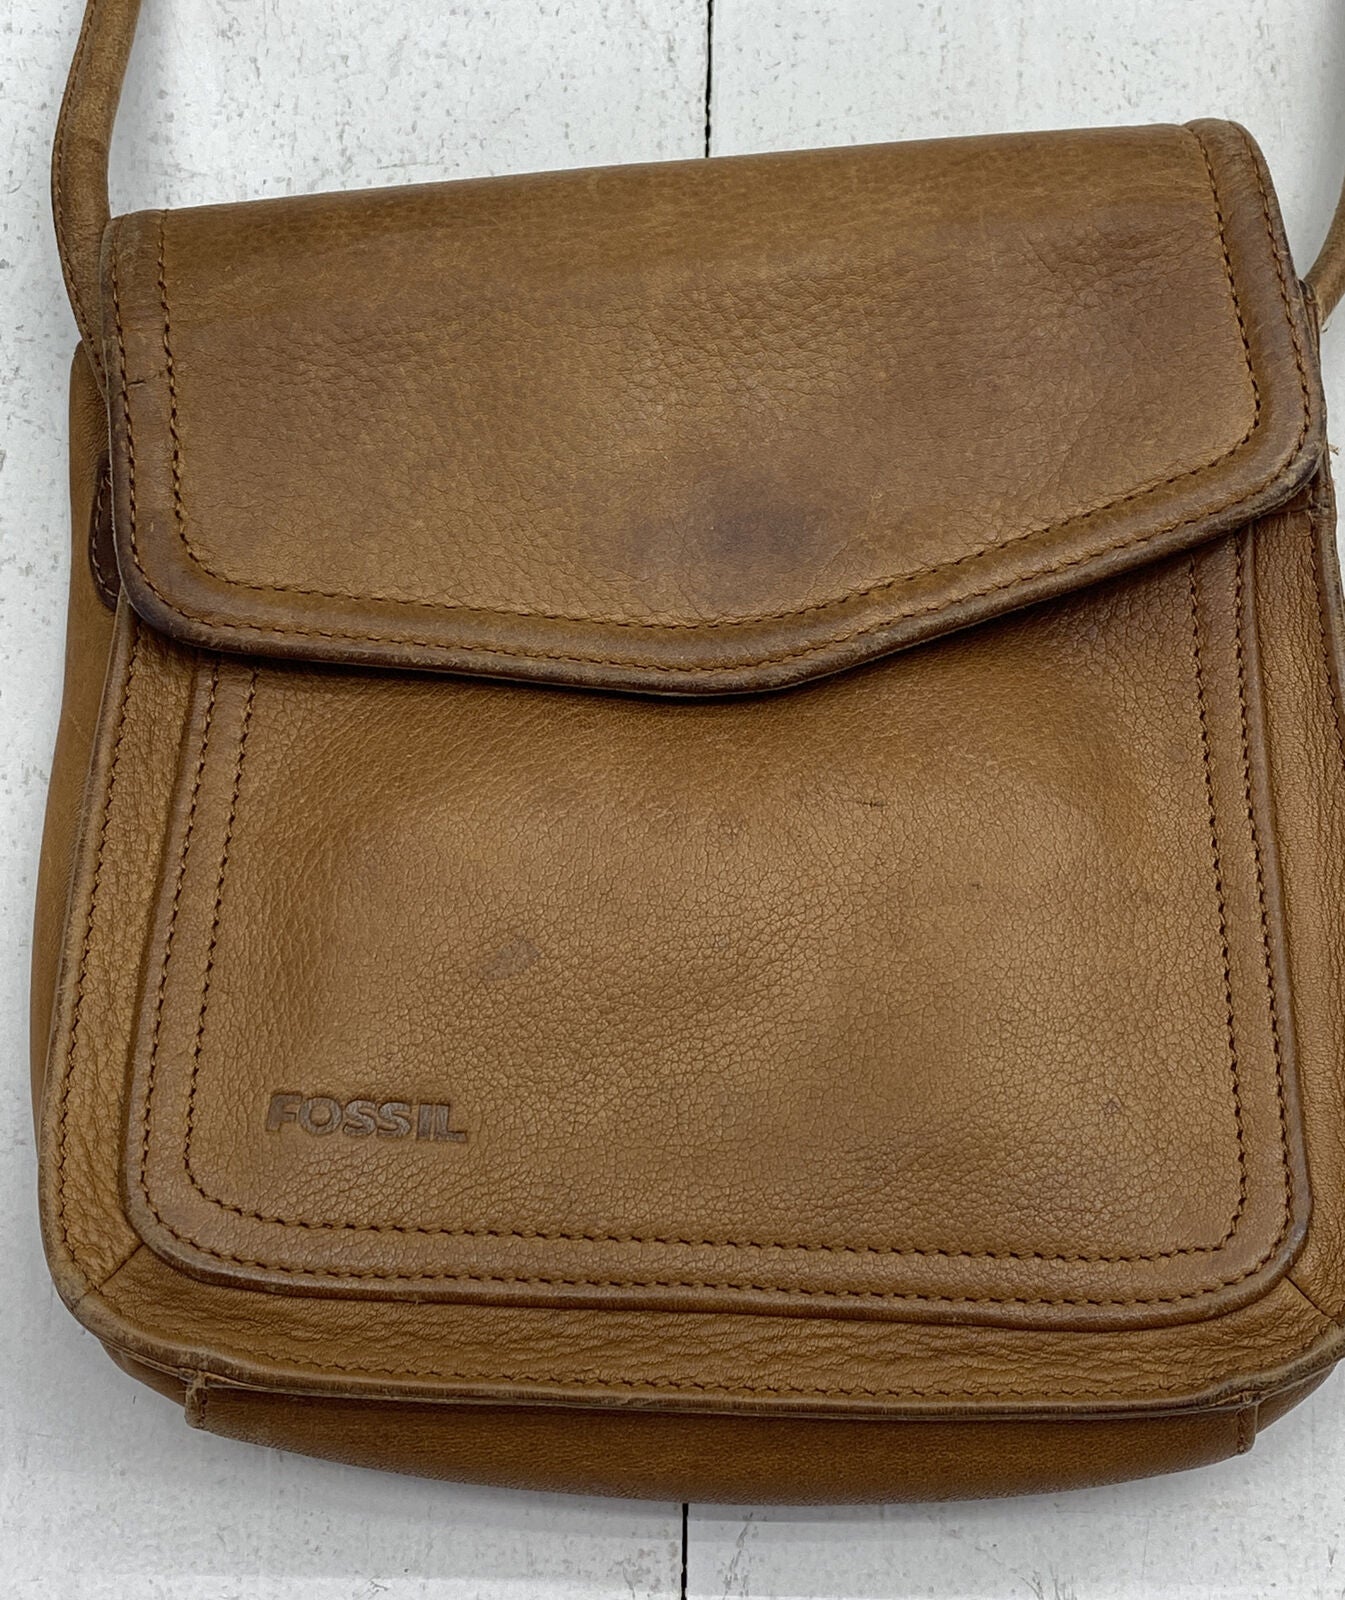 Fossil Harwell Suede Hobo Bag | Dillard's | Hobo bag, Bags, Leather